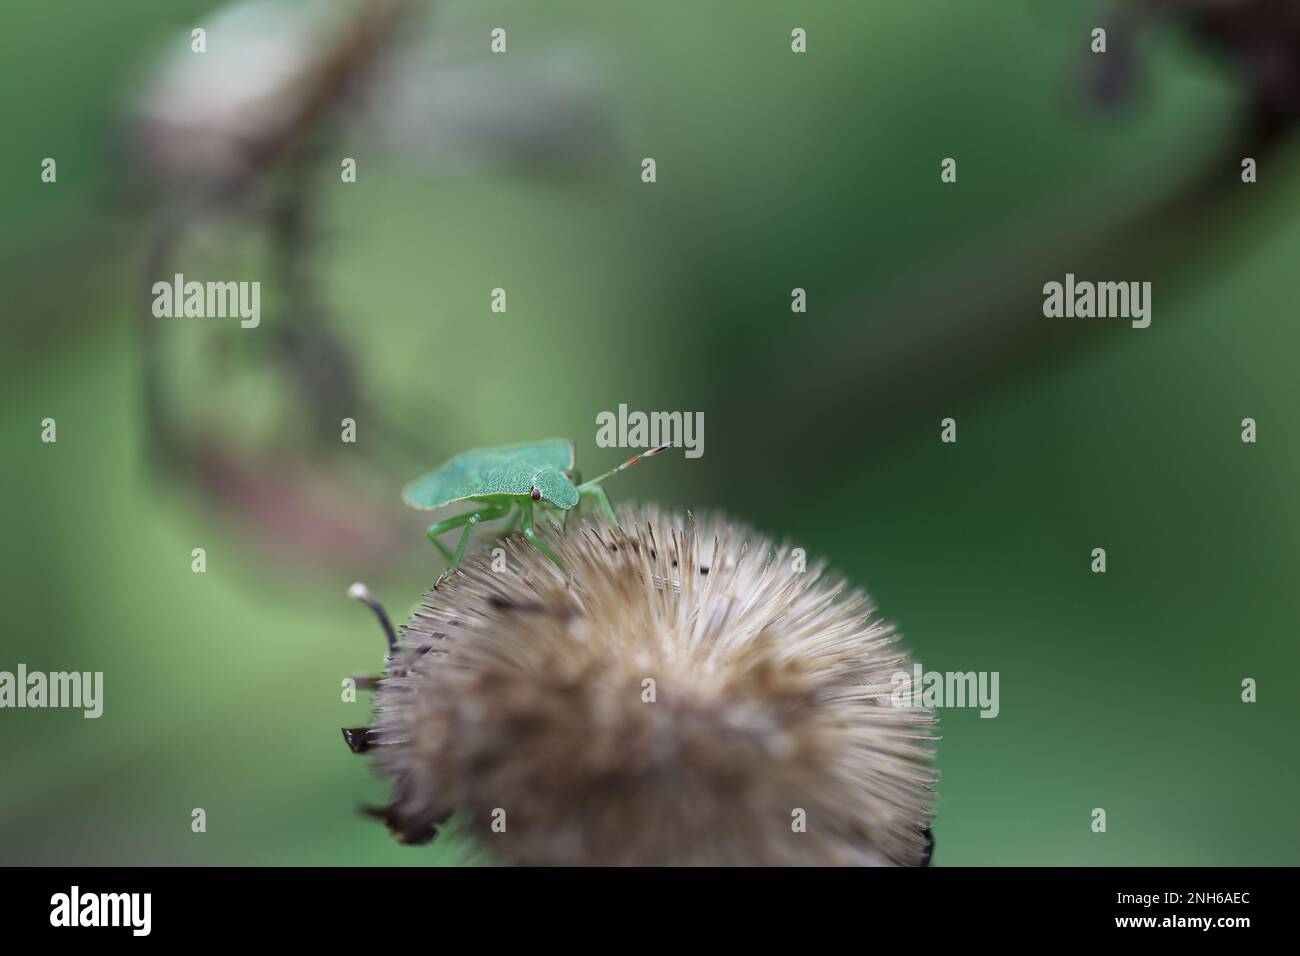 southern green stink bug sitting on a seedhead Stock Photo